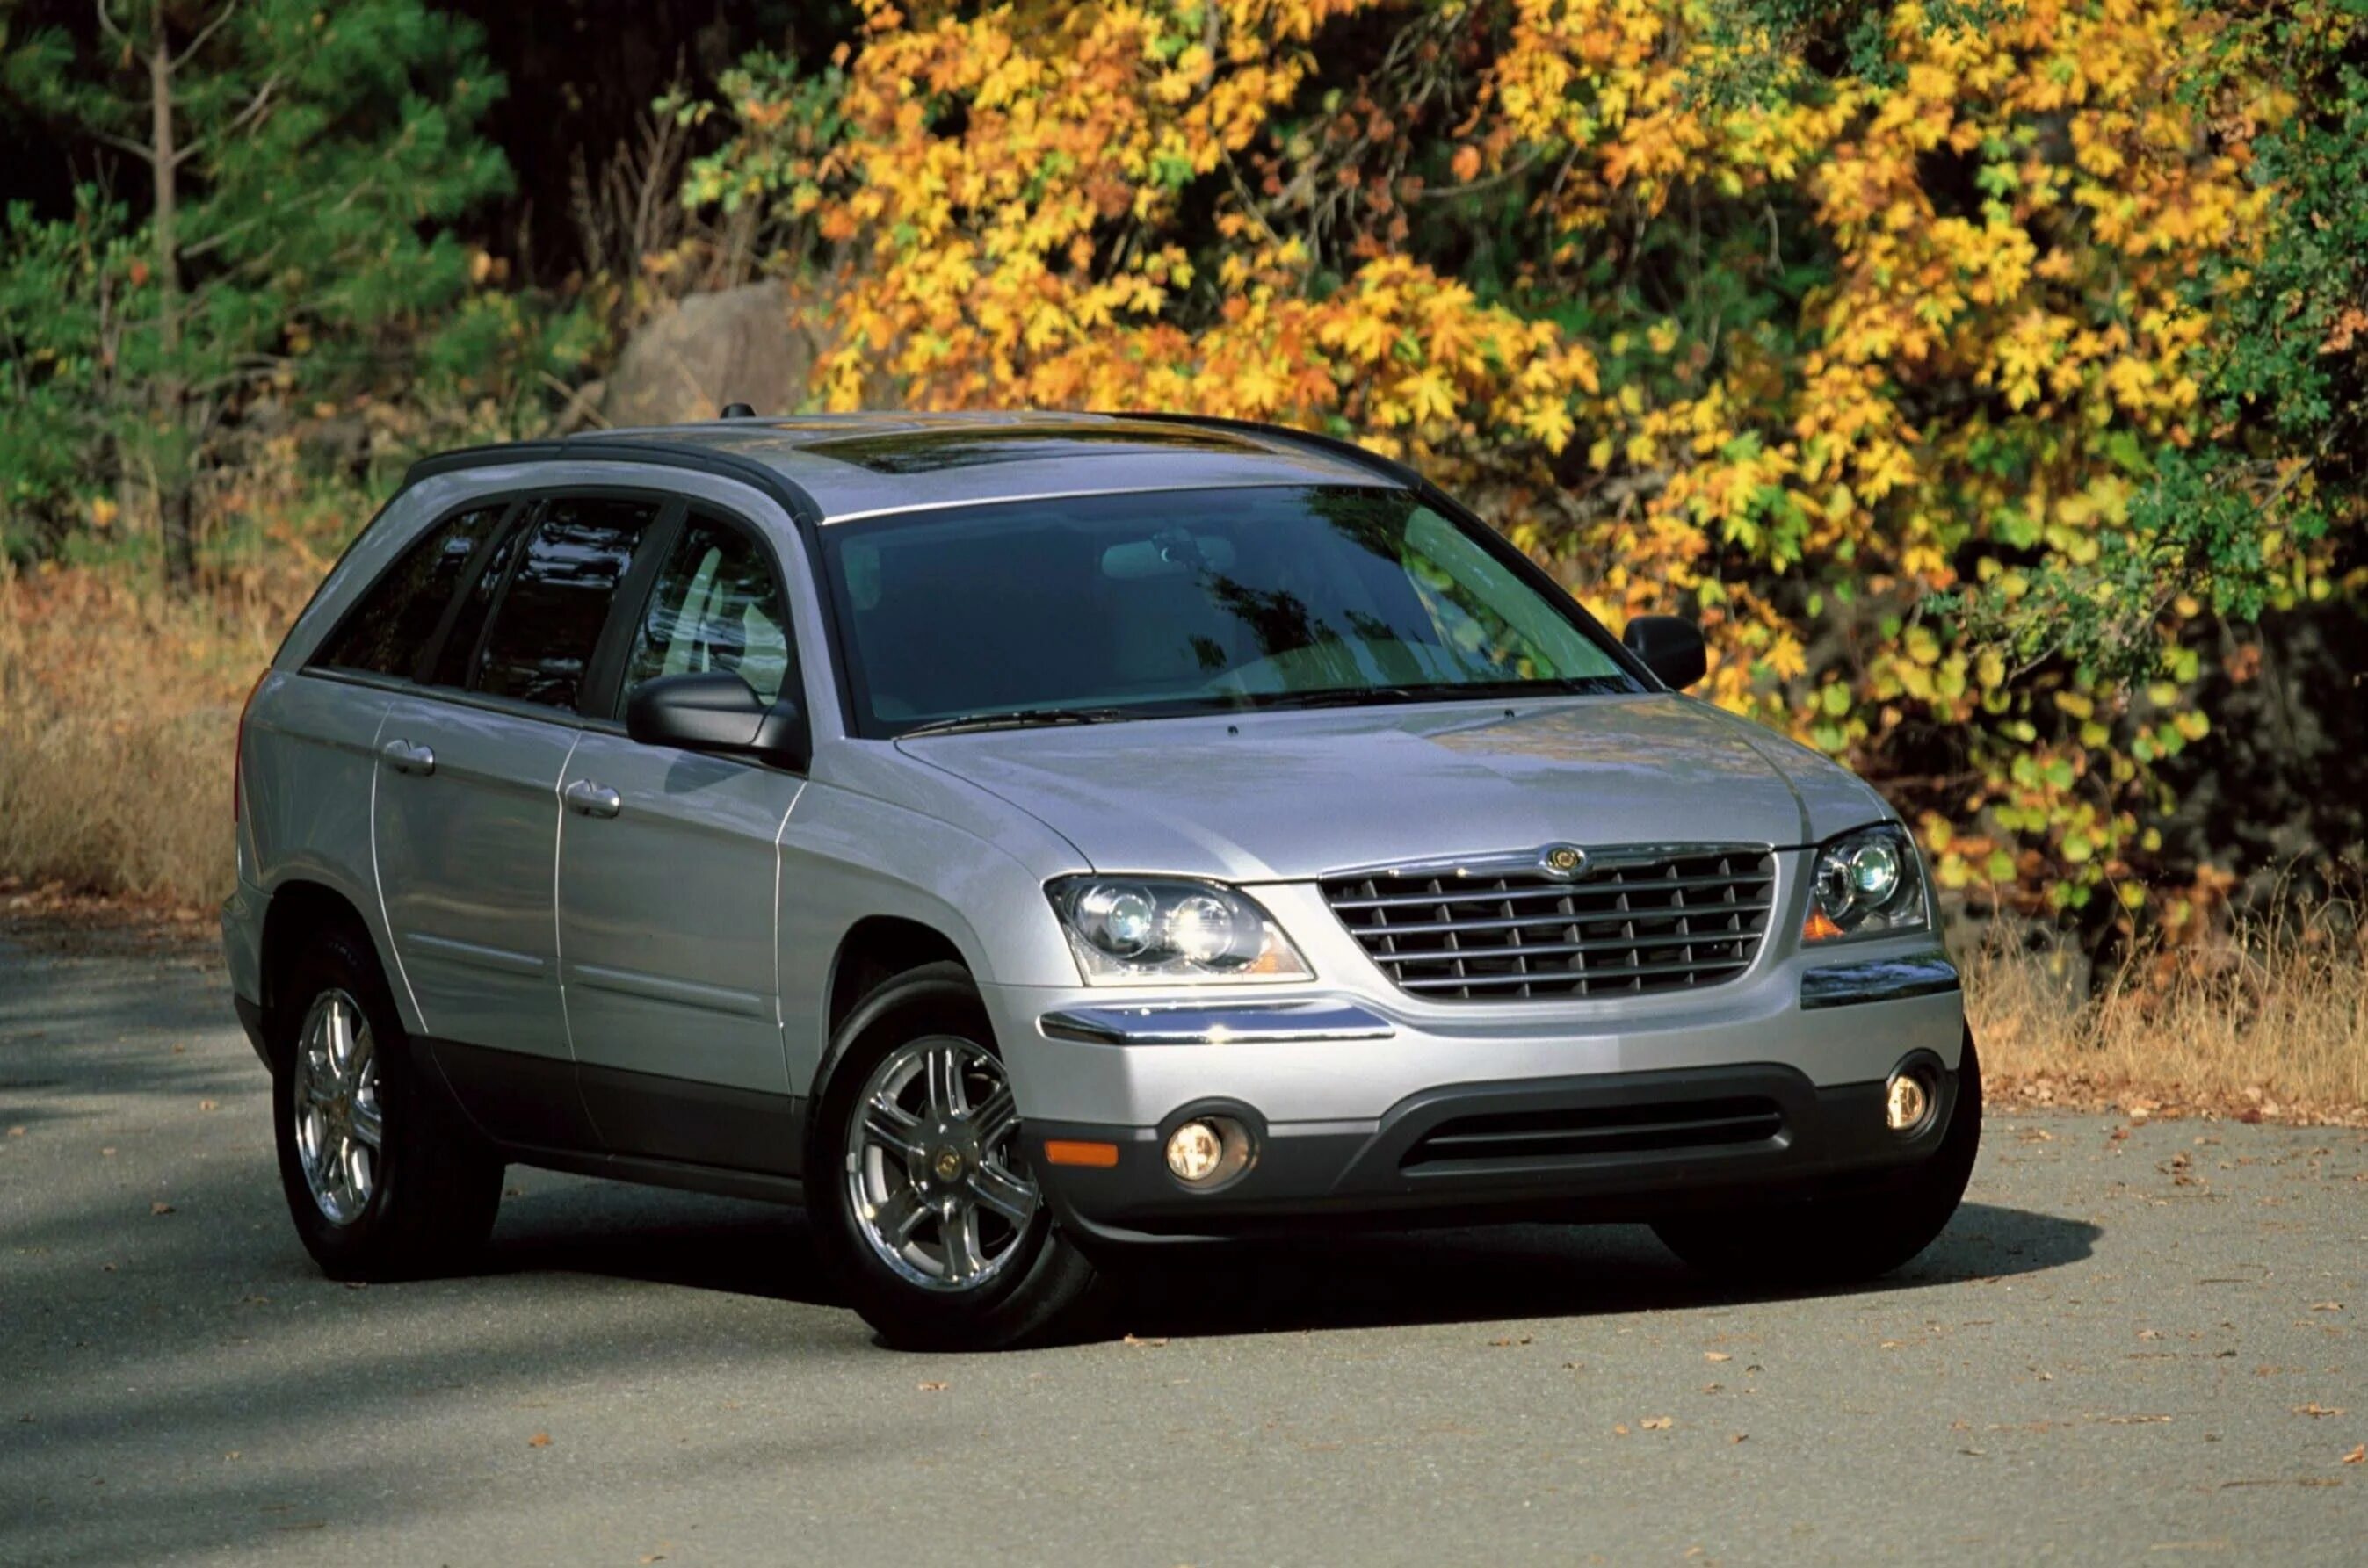 Chrysler Pacifica 2004. Крайслер Пацифика 2004. Chrysler Pacifica 2003. Chrysler Pacifica CS 2003-2008.